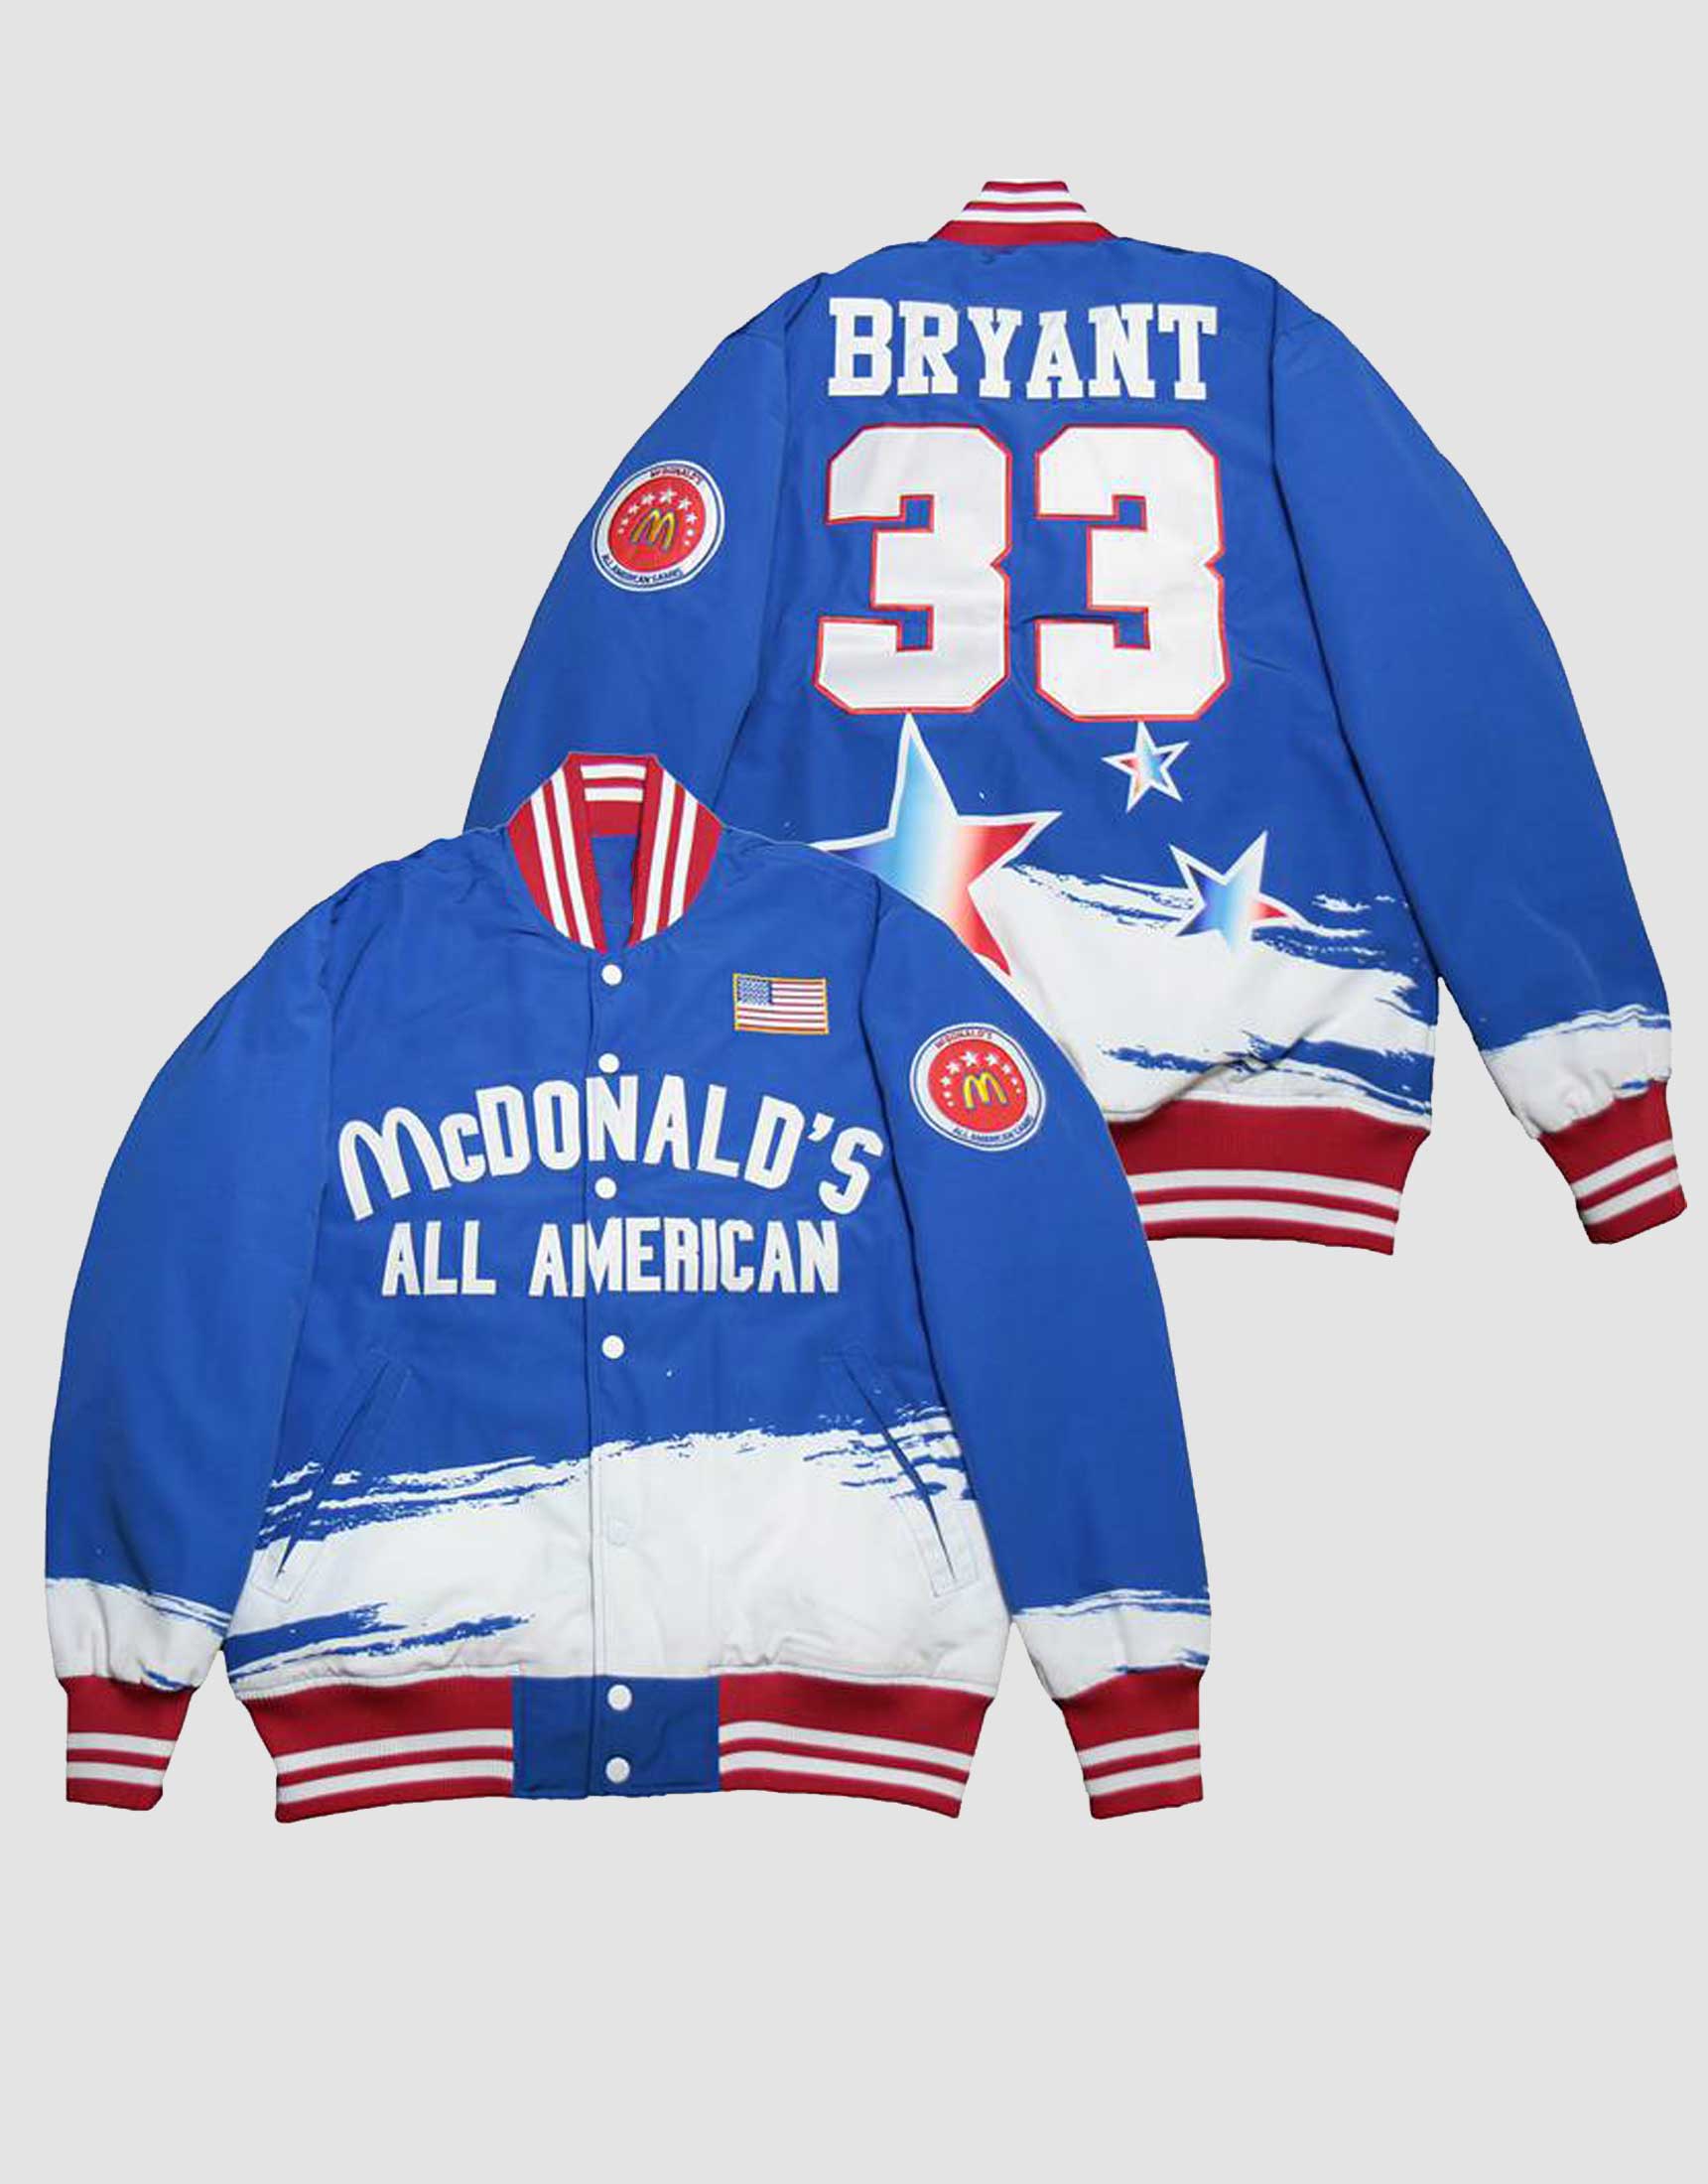 Kobe Bryant McDonald's All American 33 Highschool Basketball